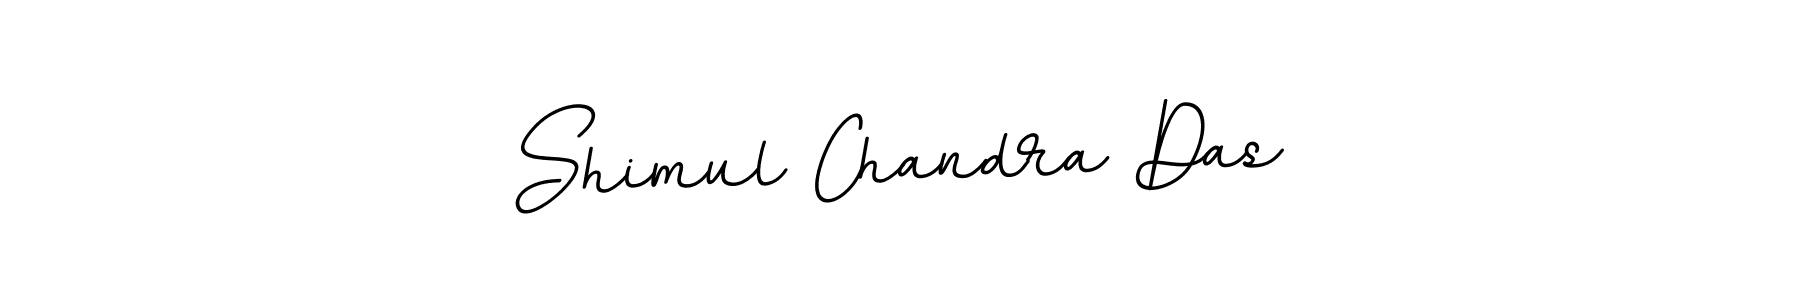 How to Draw Shimul Chandra Das signature style? BallpointsItalic-DORy9 is a latest design signature styles for name Shimul Chandra Das. Shimul Chandra Das signature style 11 images and pictures png